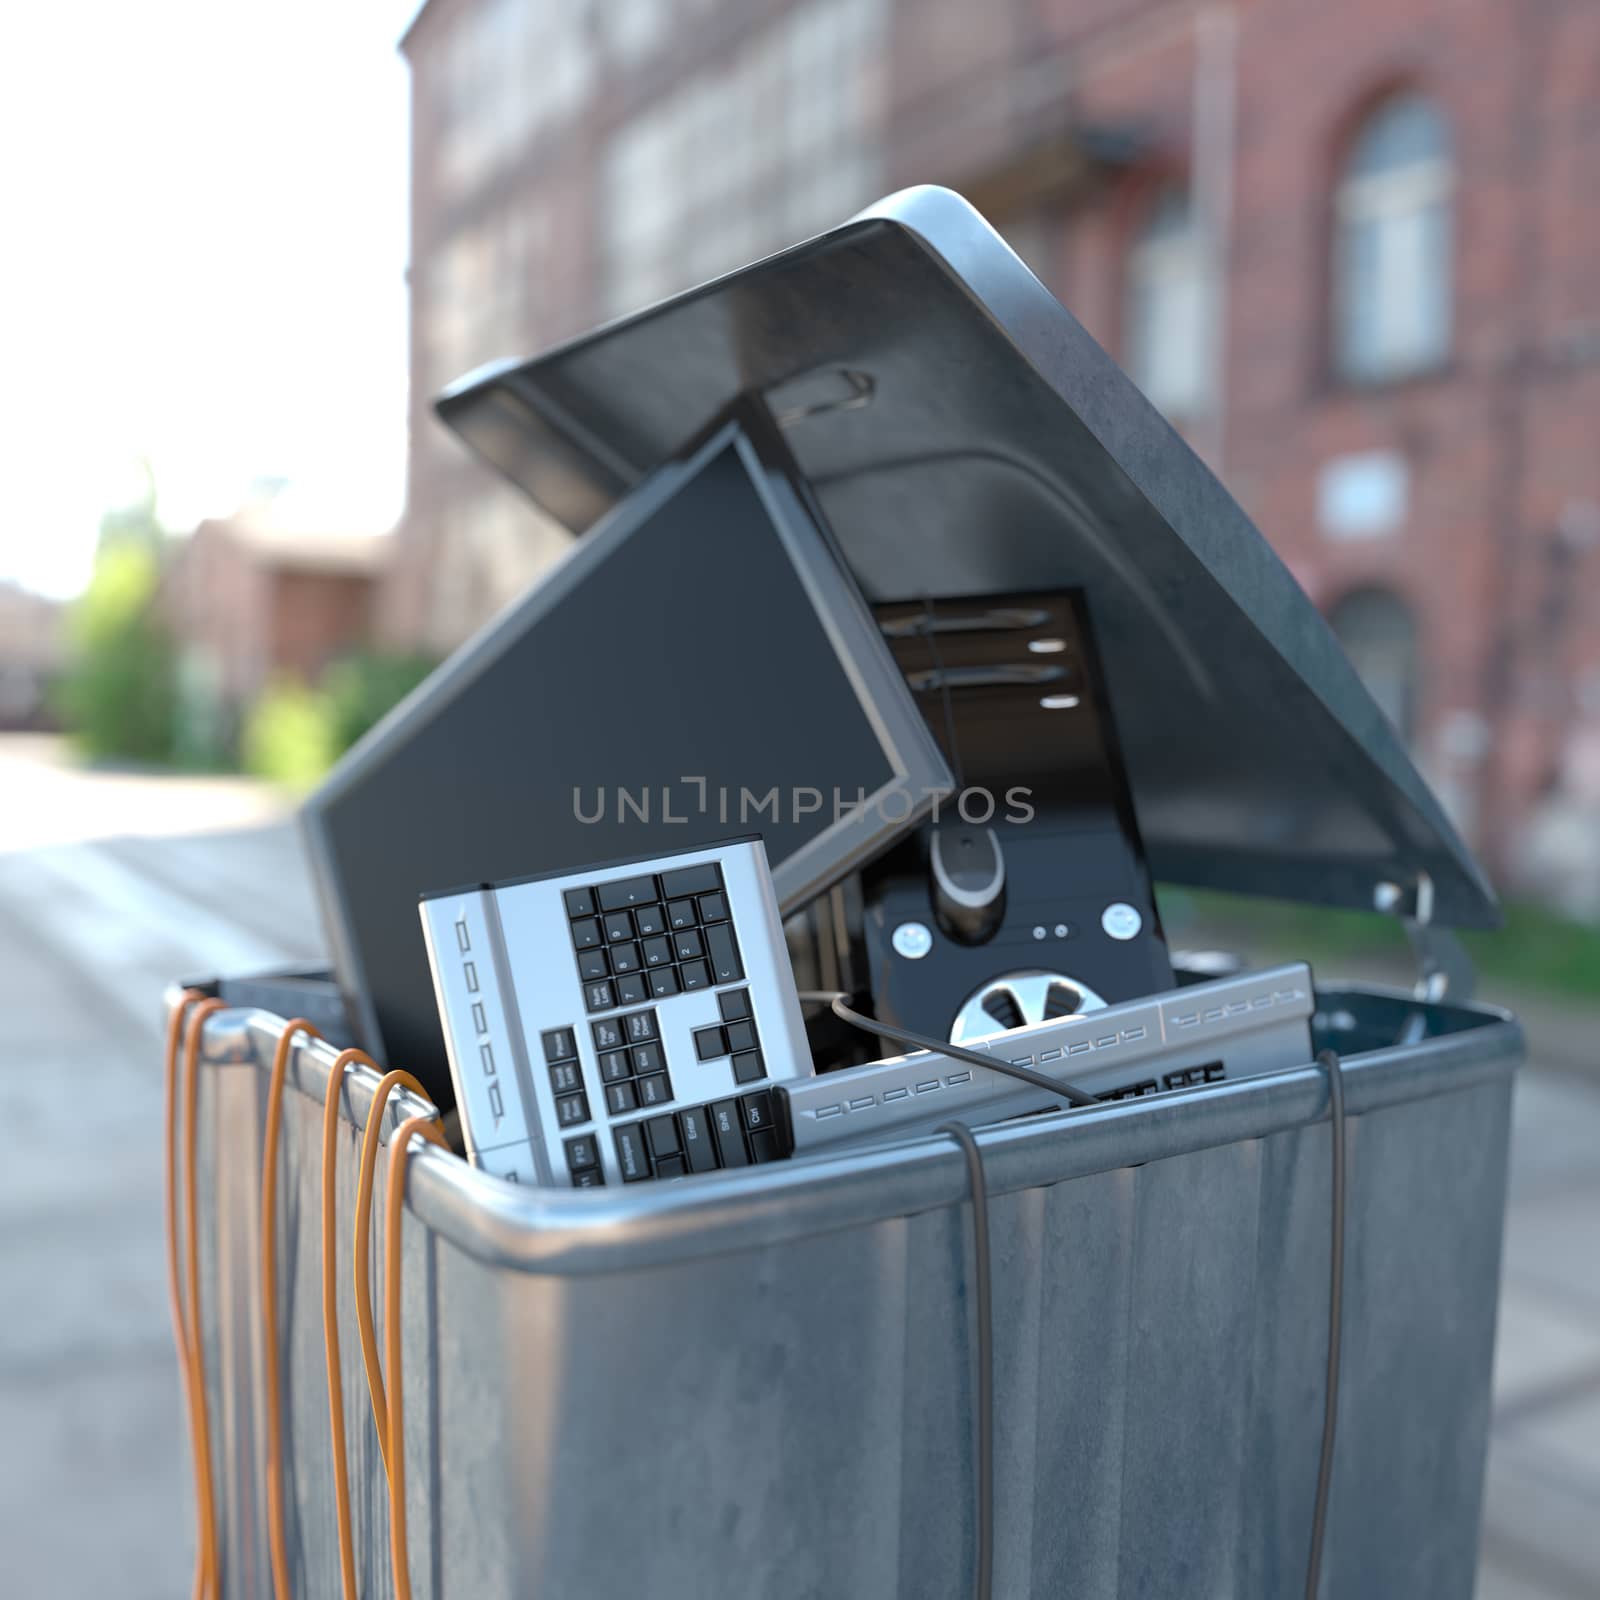 computers in a trash bin on a street by denisgo